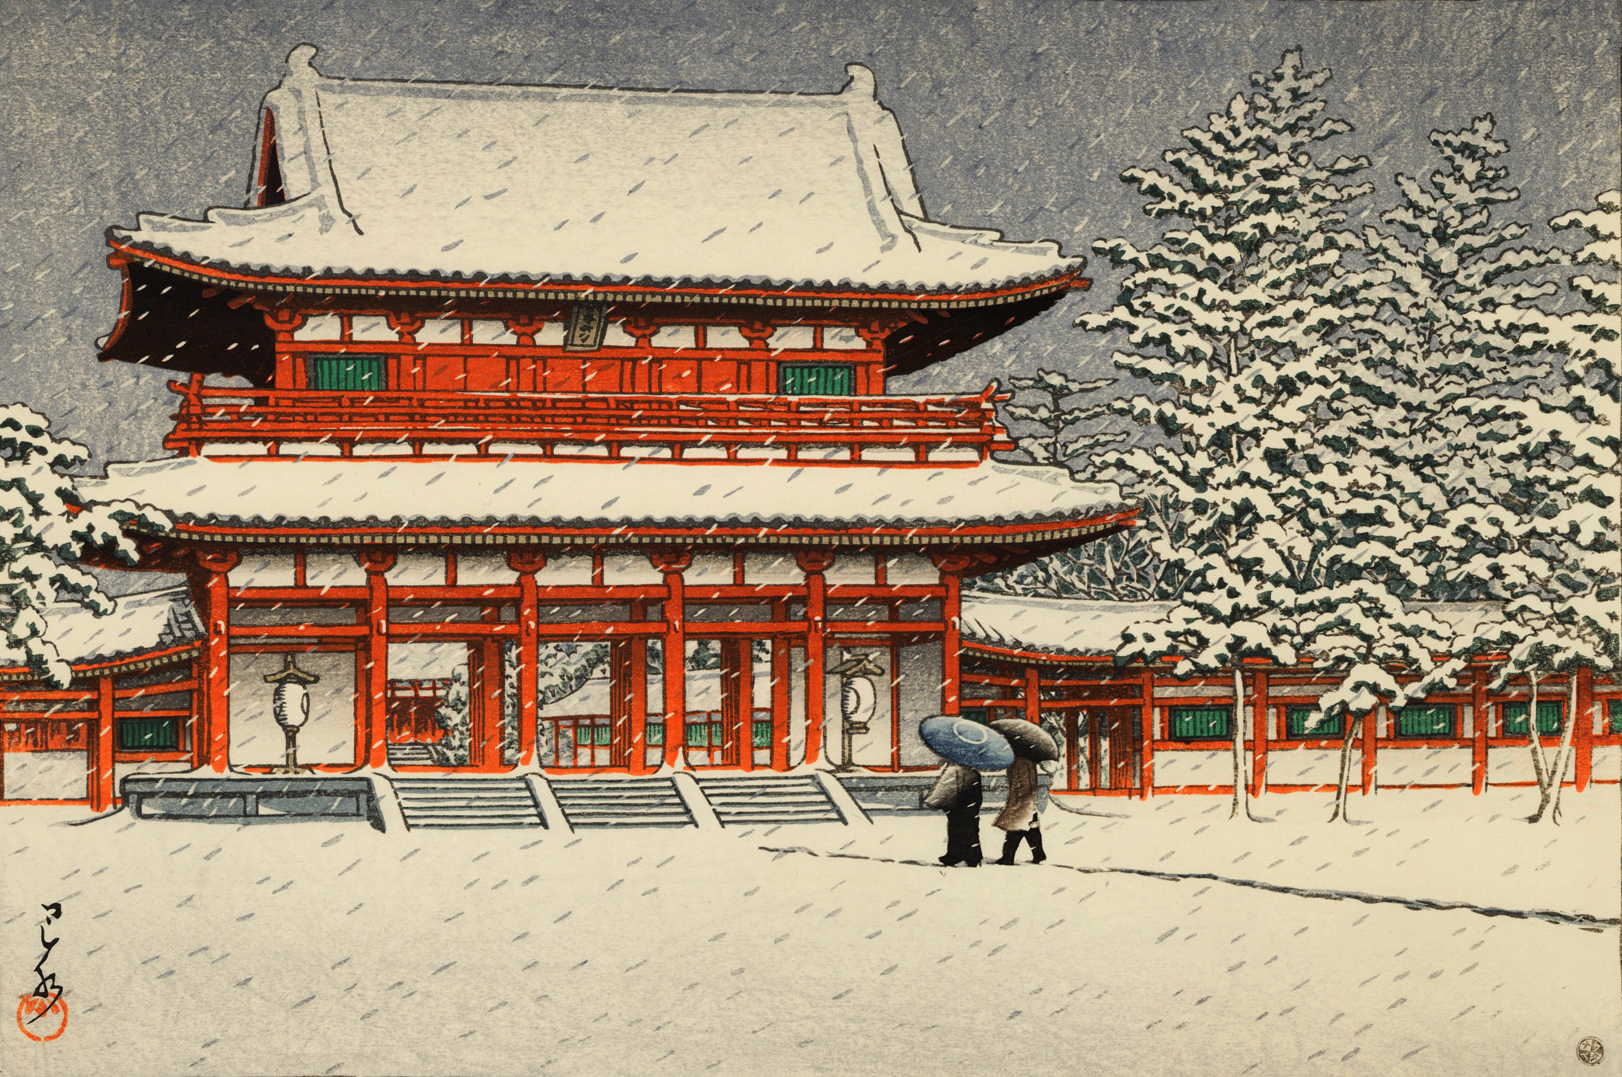 “Snow at Heian Shrine, Kyoto” by Kawase Hasui (1948)